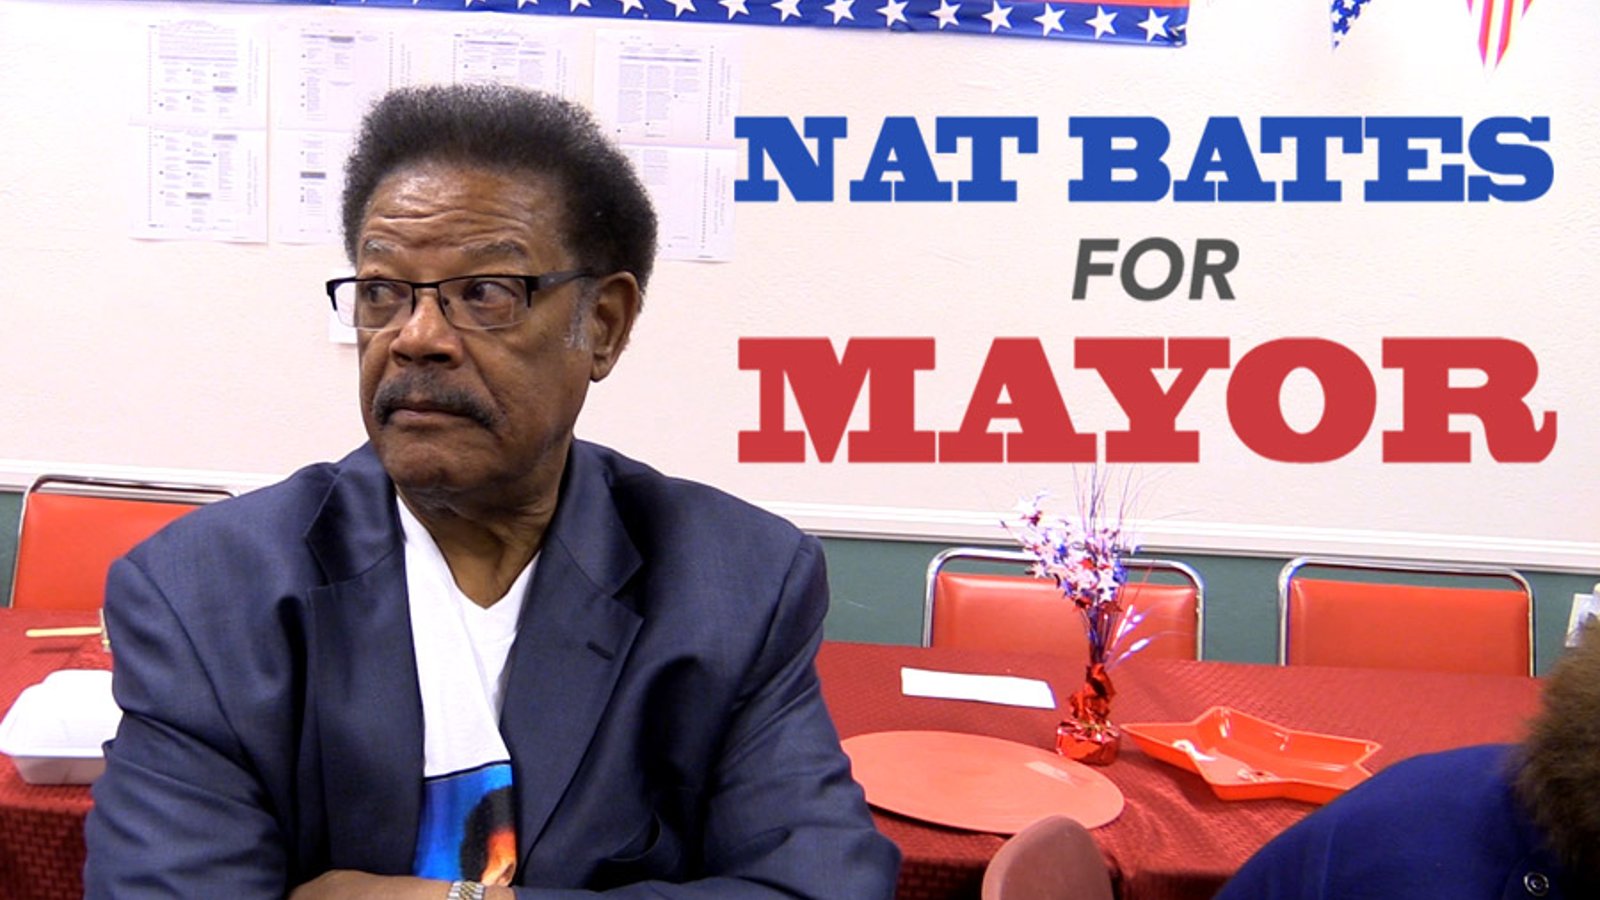 Nat Bates for Mayor - Corporate Influence on Local Politics